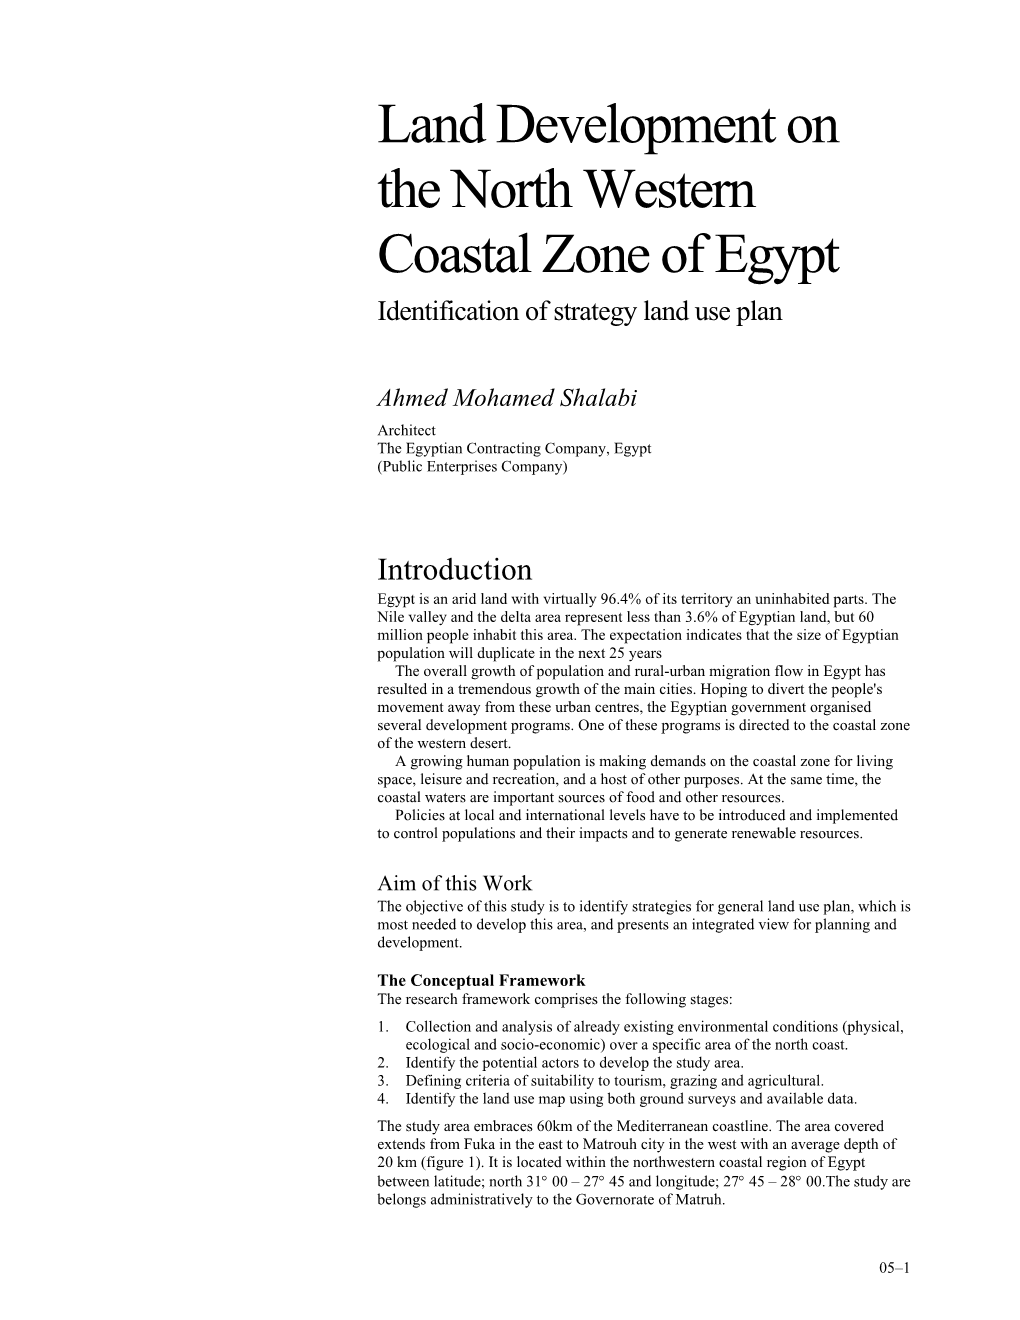 Land Development on the North Western Coastal Zone of Egypt Identification of Strategy Land Use Plan